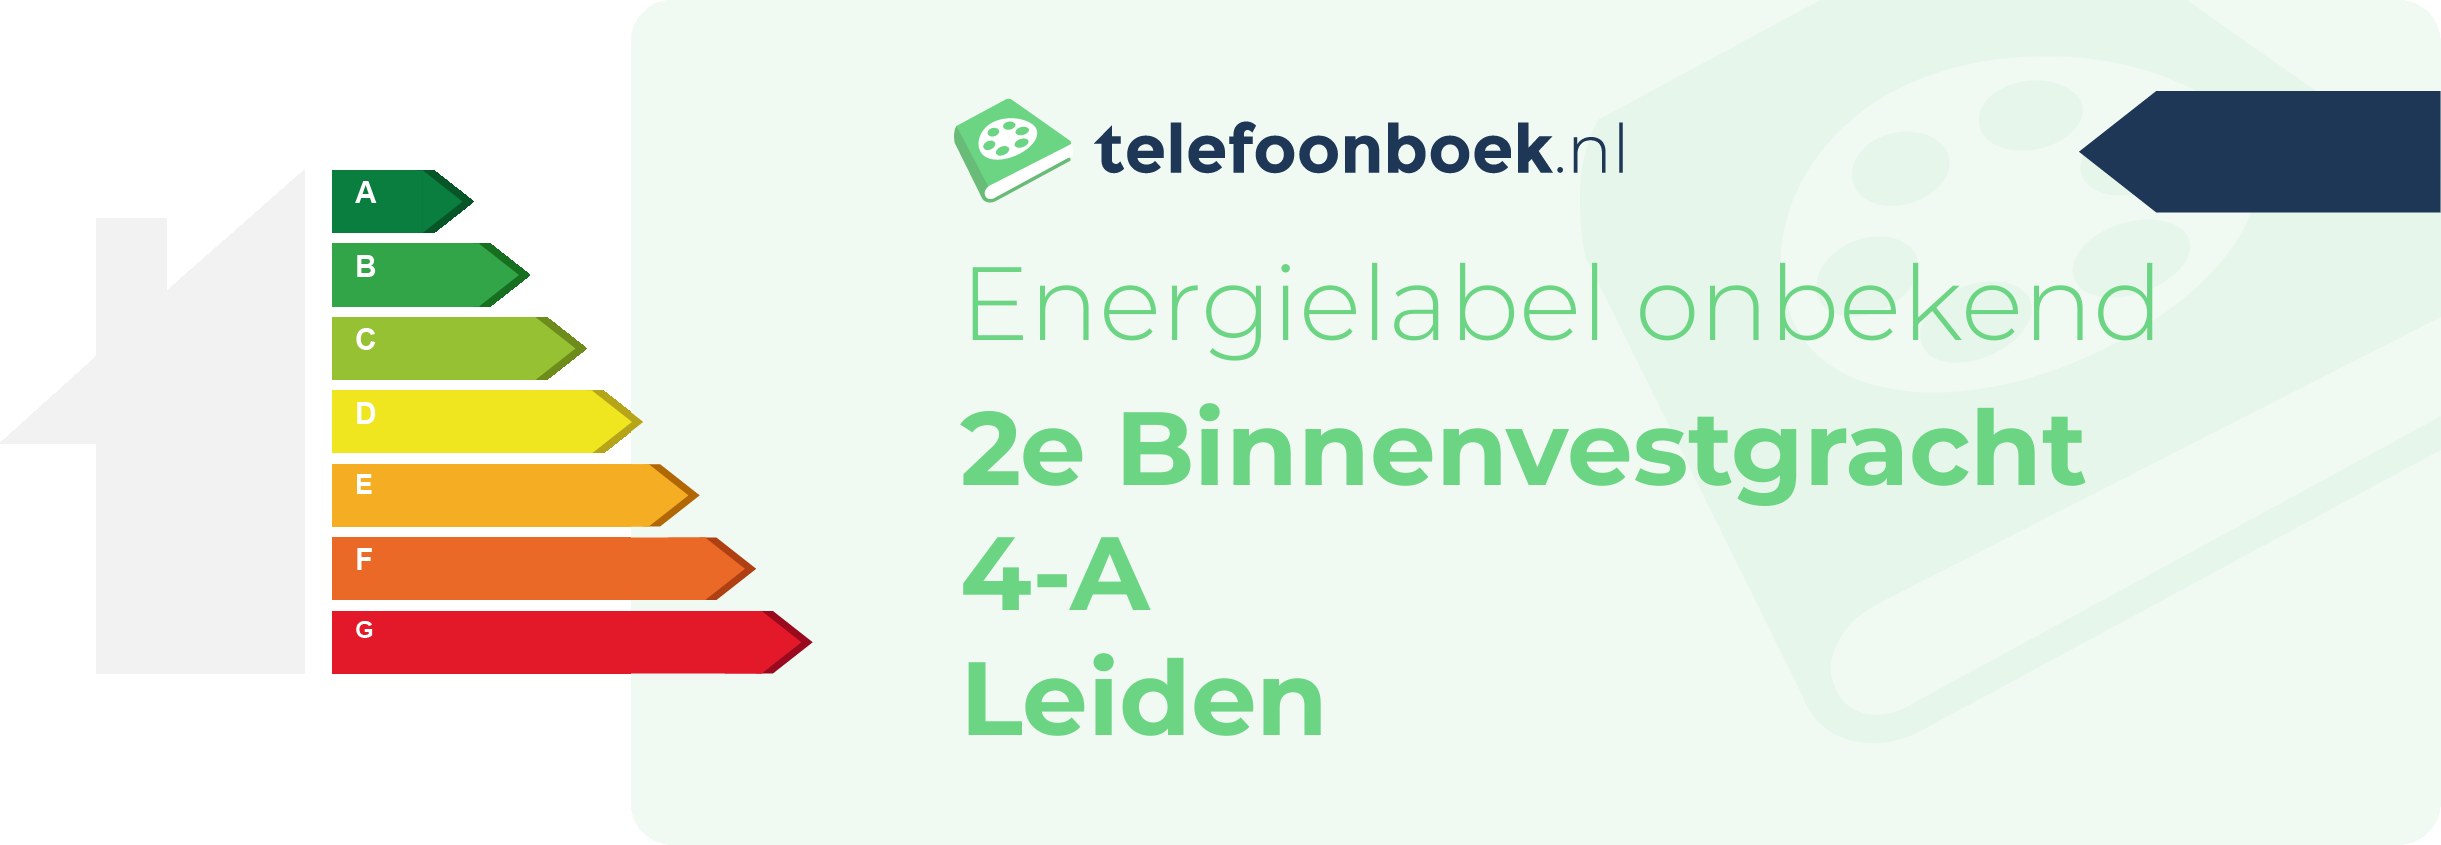 Energielabel 2e Binnenvestgracht 4-A Leiden